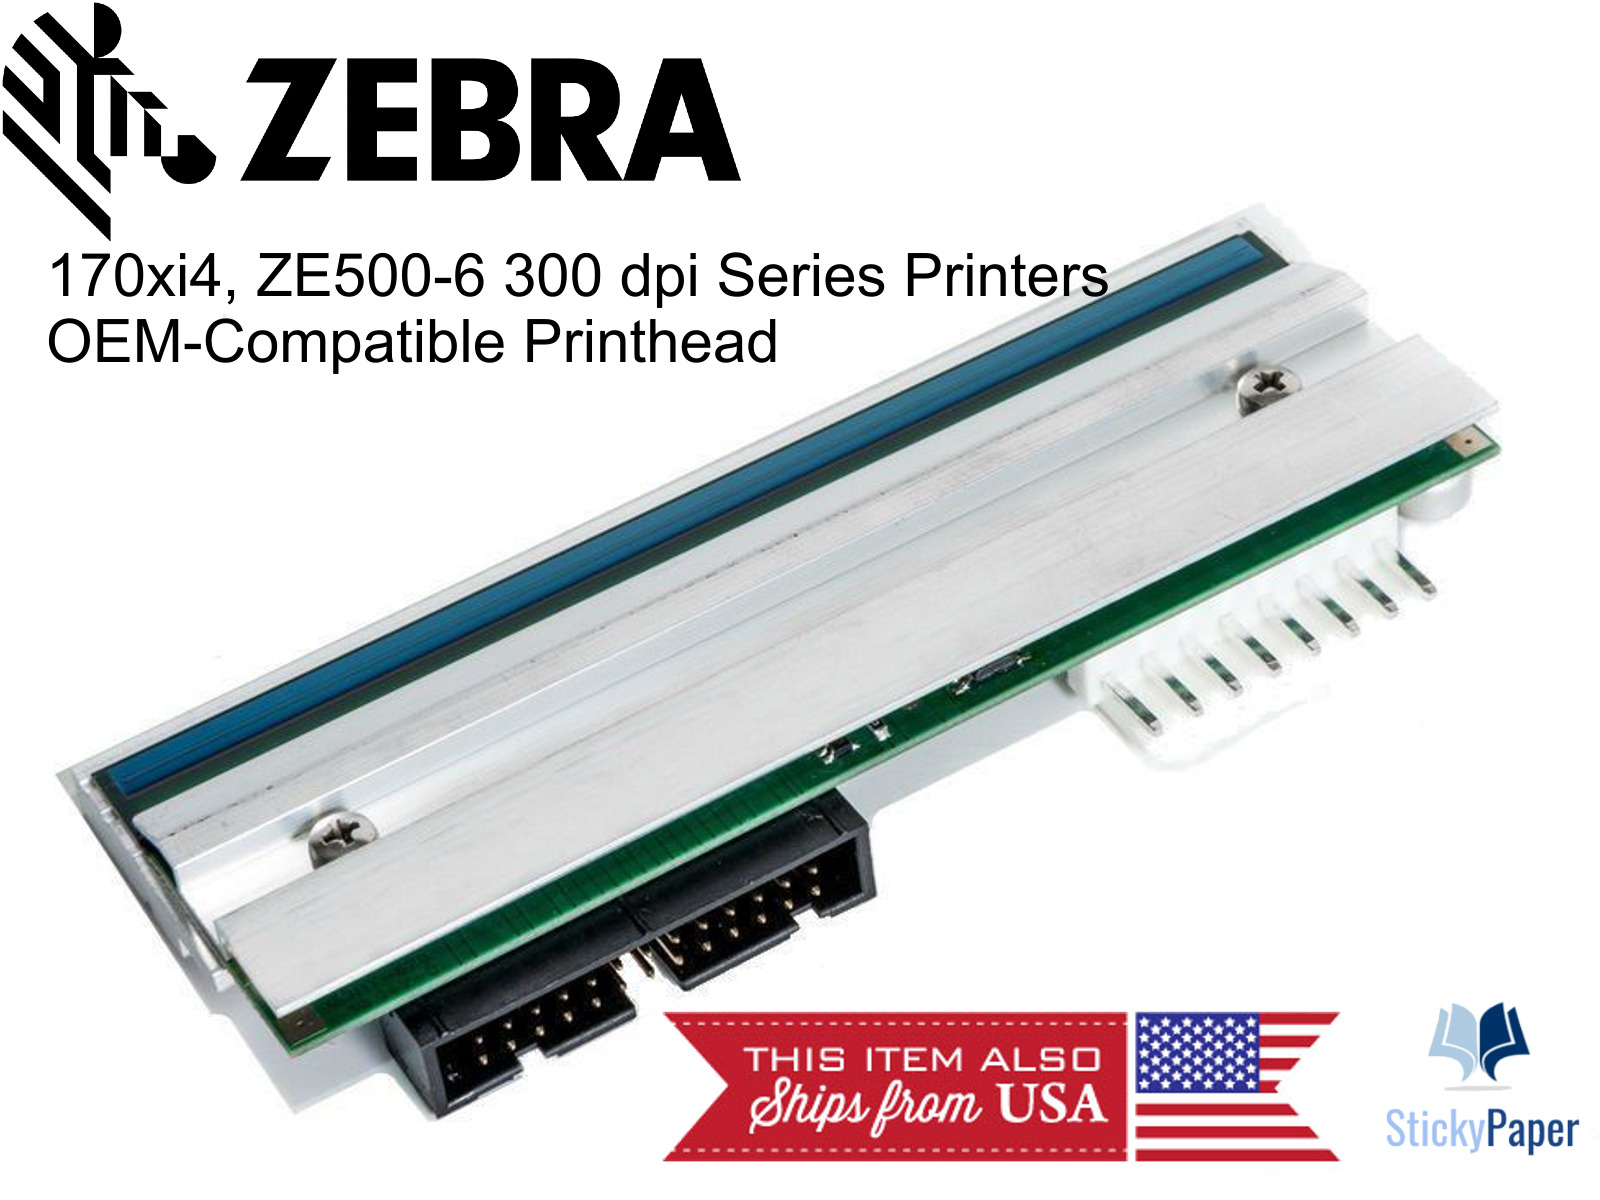 Zebra 170Xi4/ZE500-6 300 dpi Printhead (P1004237) USA Stocked & Shipped